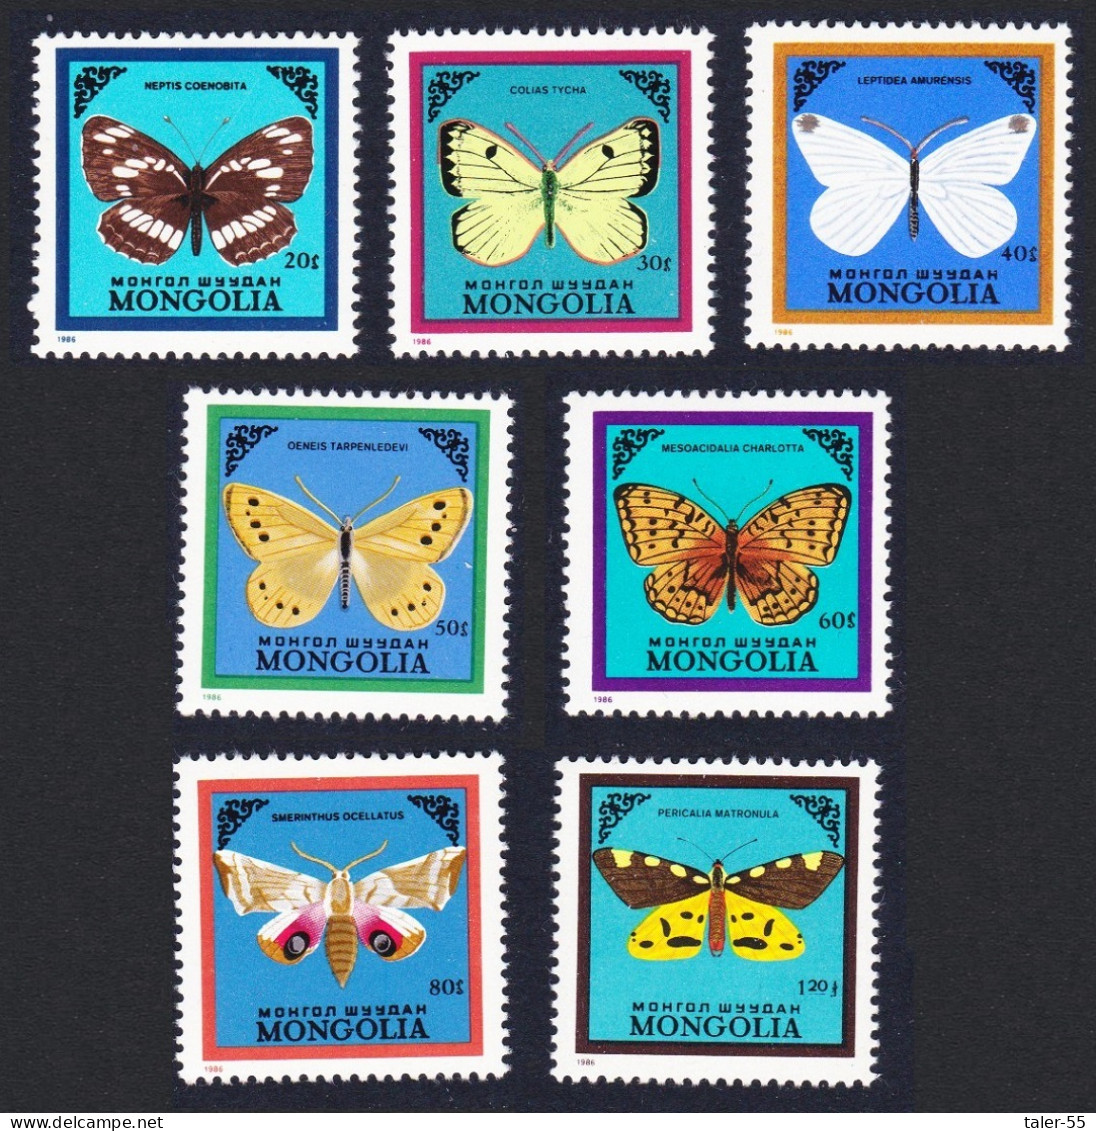 Mongolia Butterflies And Moths 7v 1986 MNH SG#1747-1753 - Mongolia